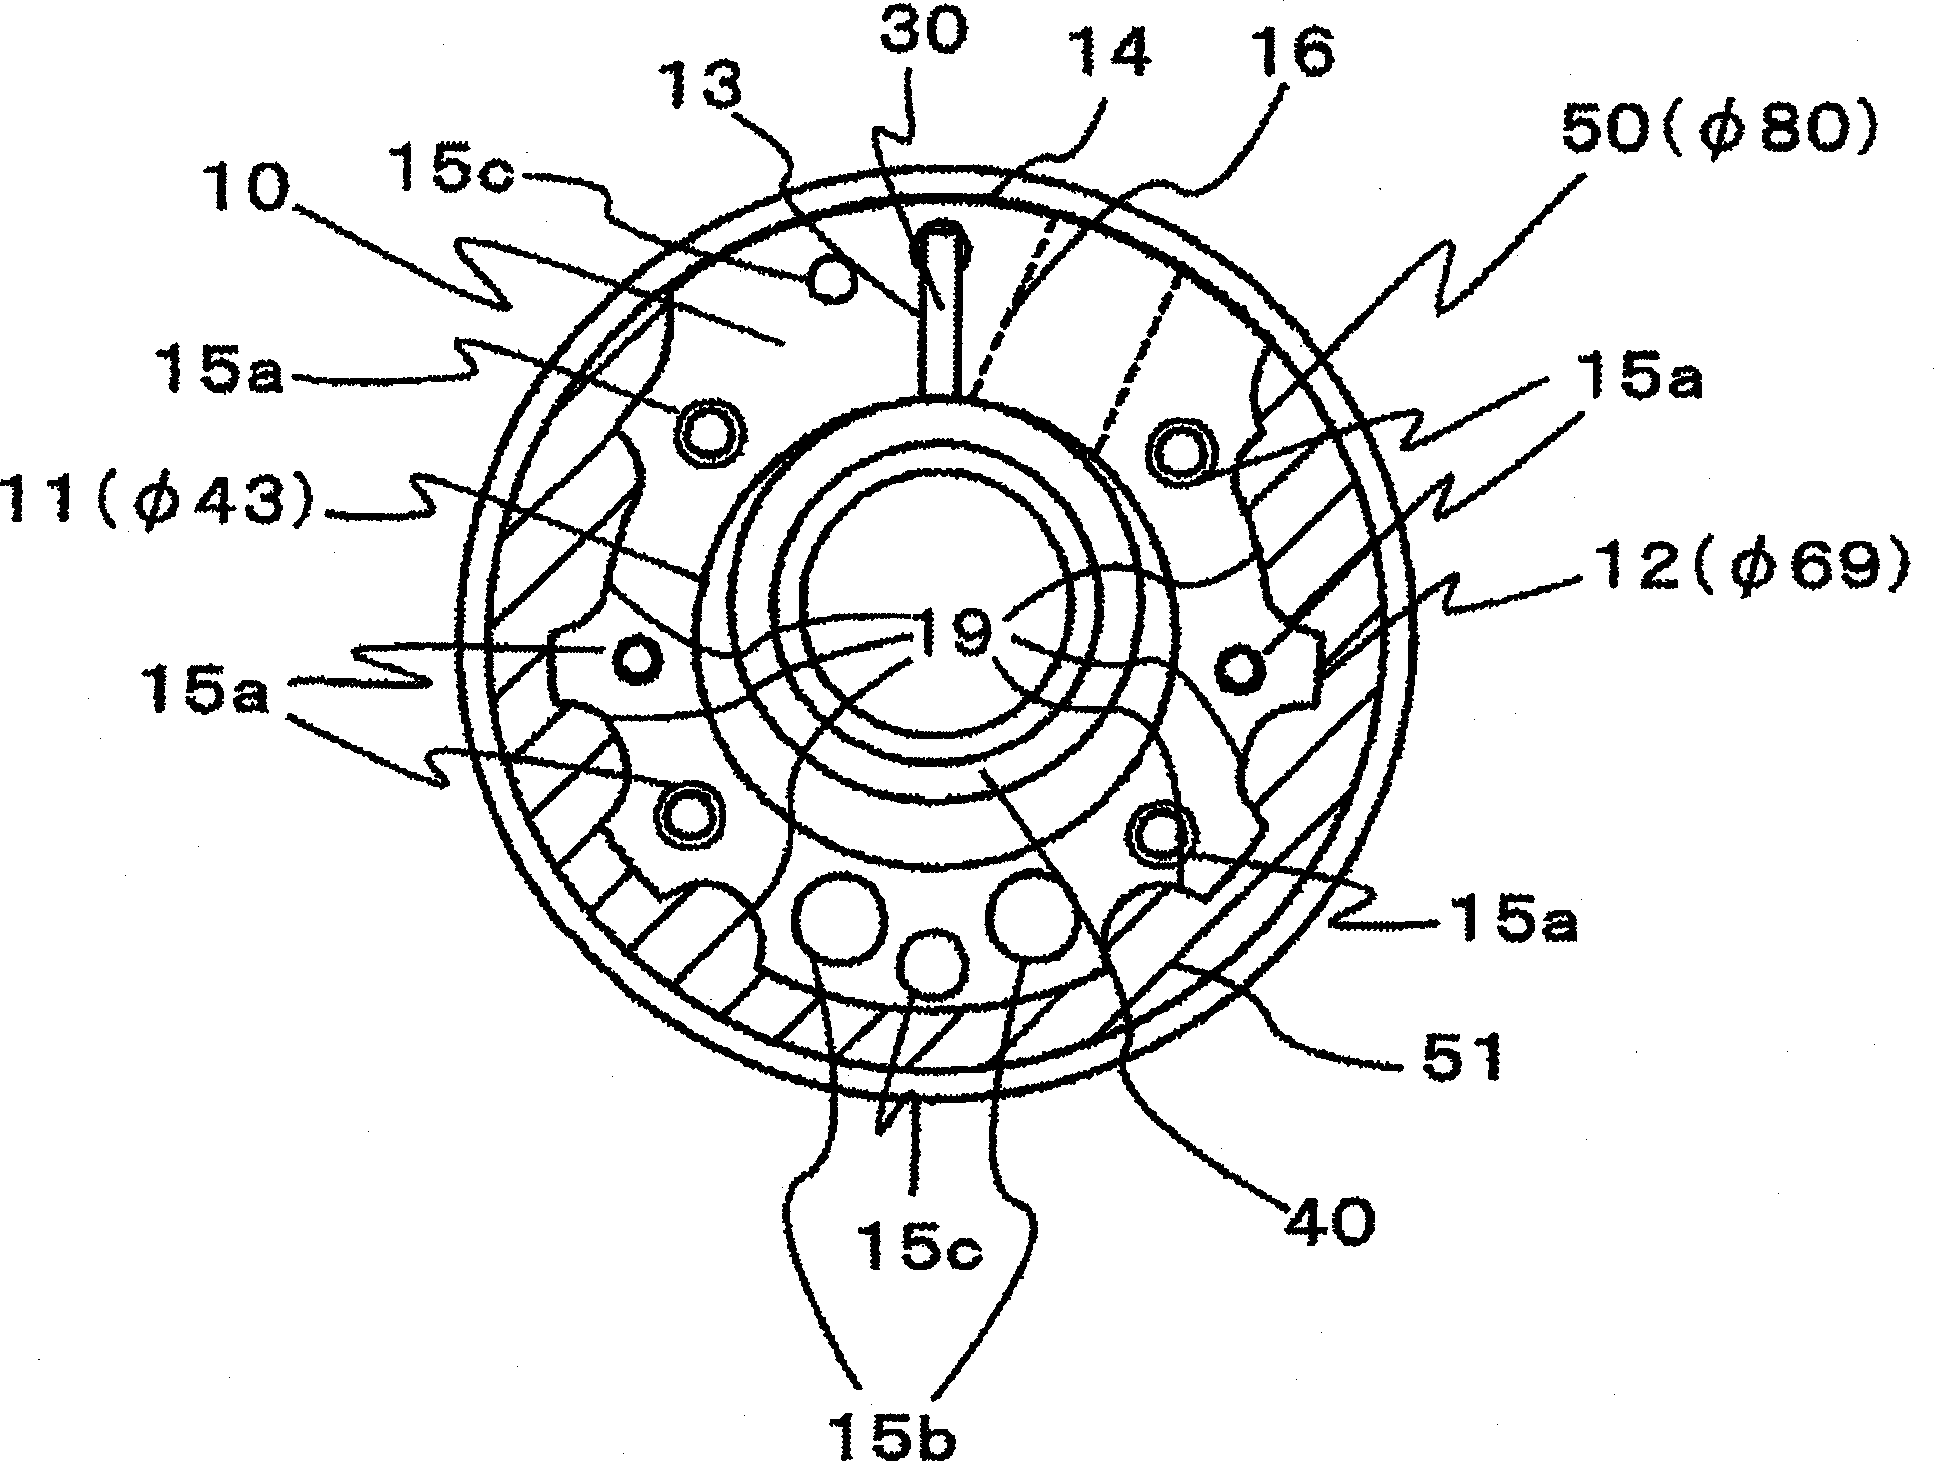 Rotary fluid machine